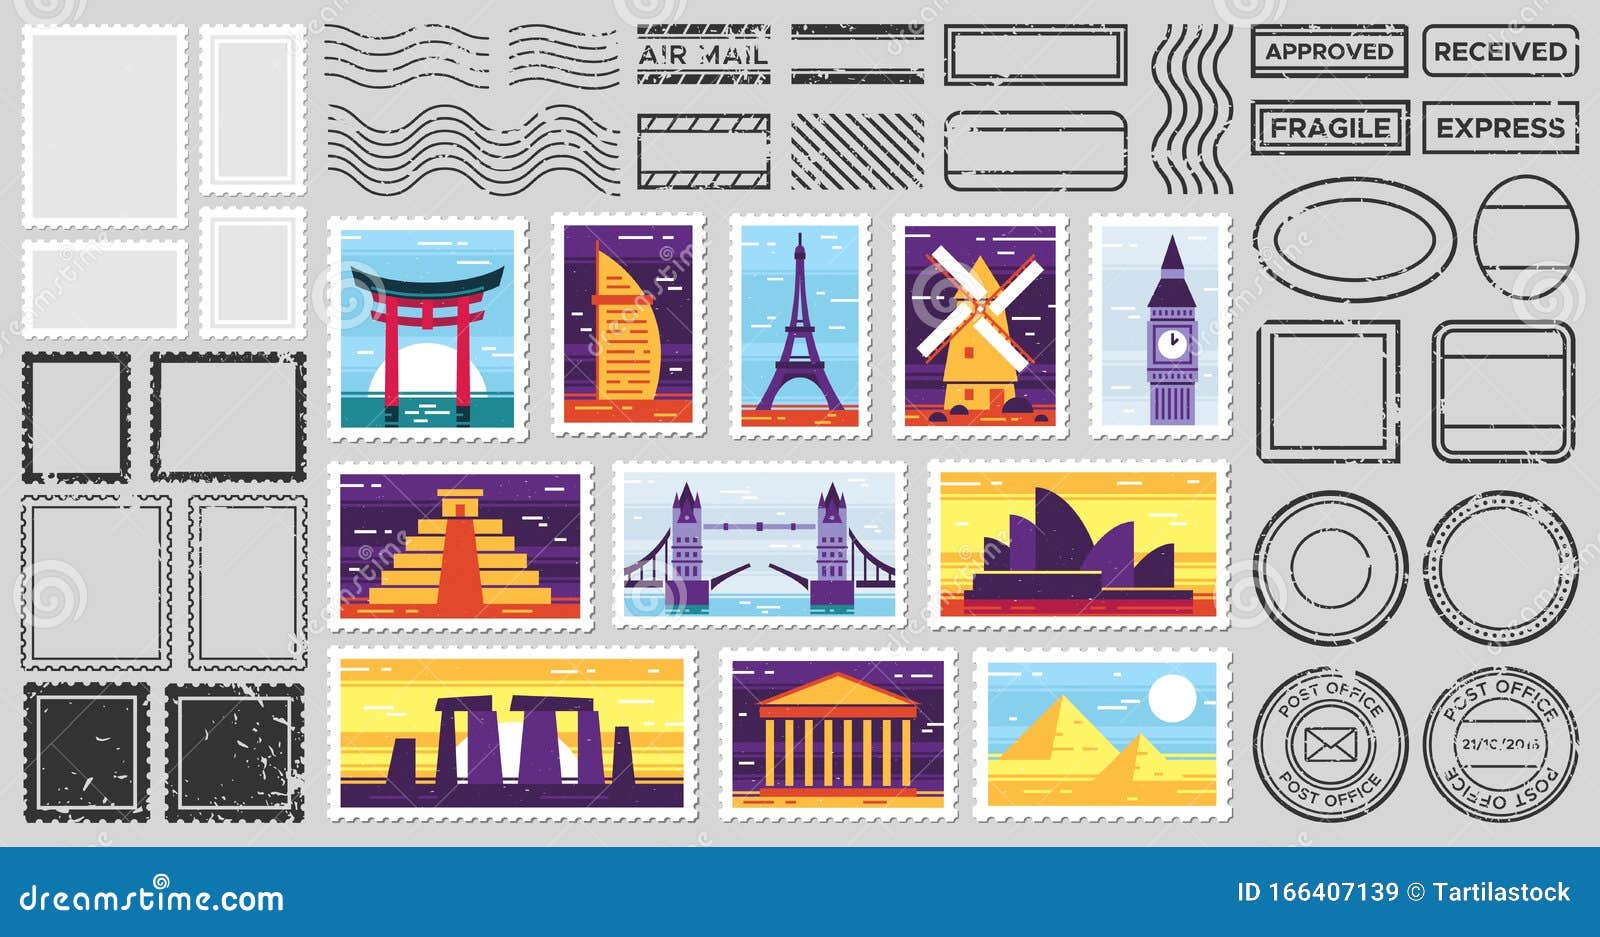 traveler mail post stamp. city attractions postcard, fragile stamp and postage frames  set